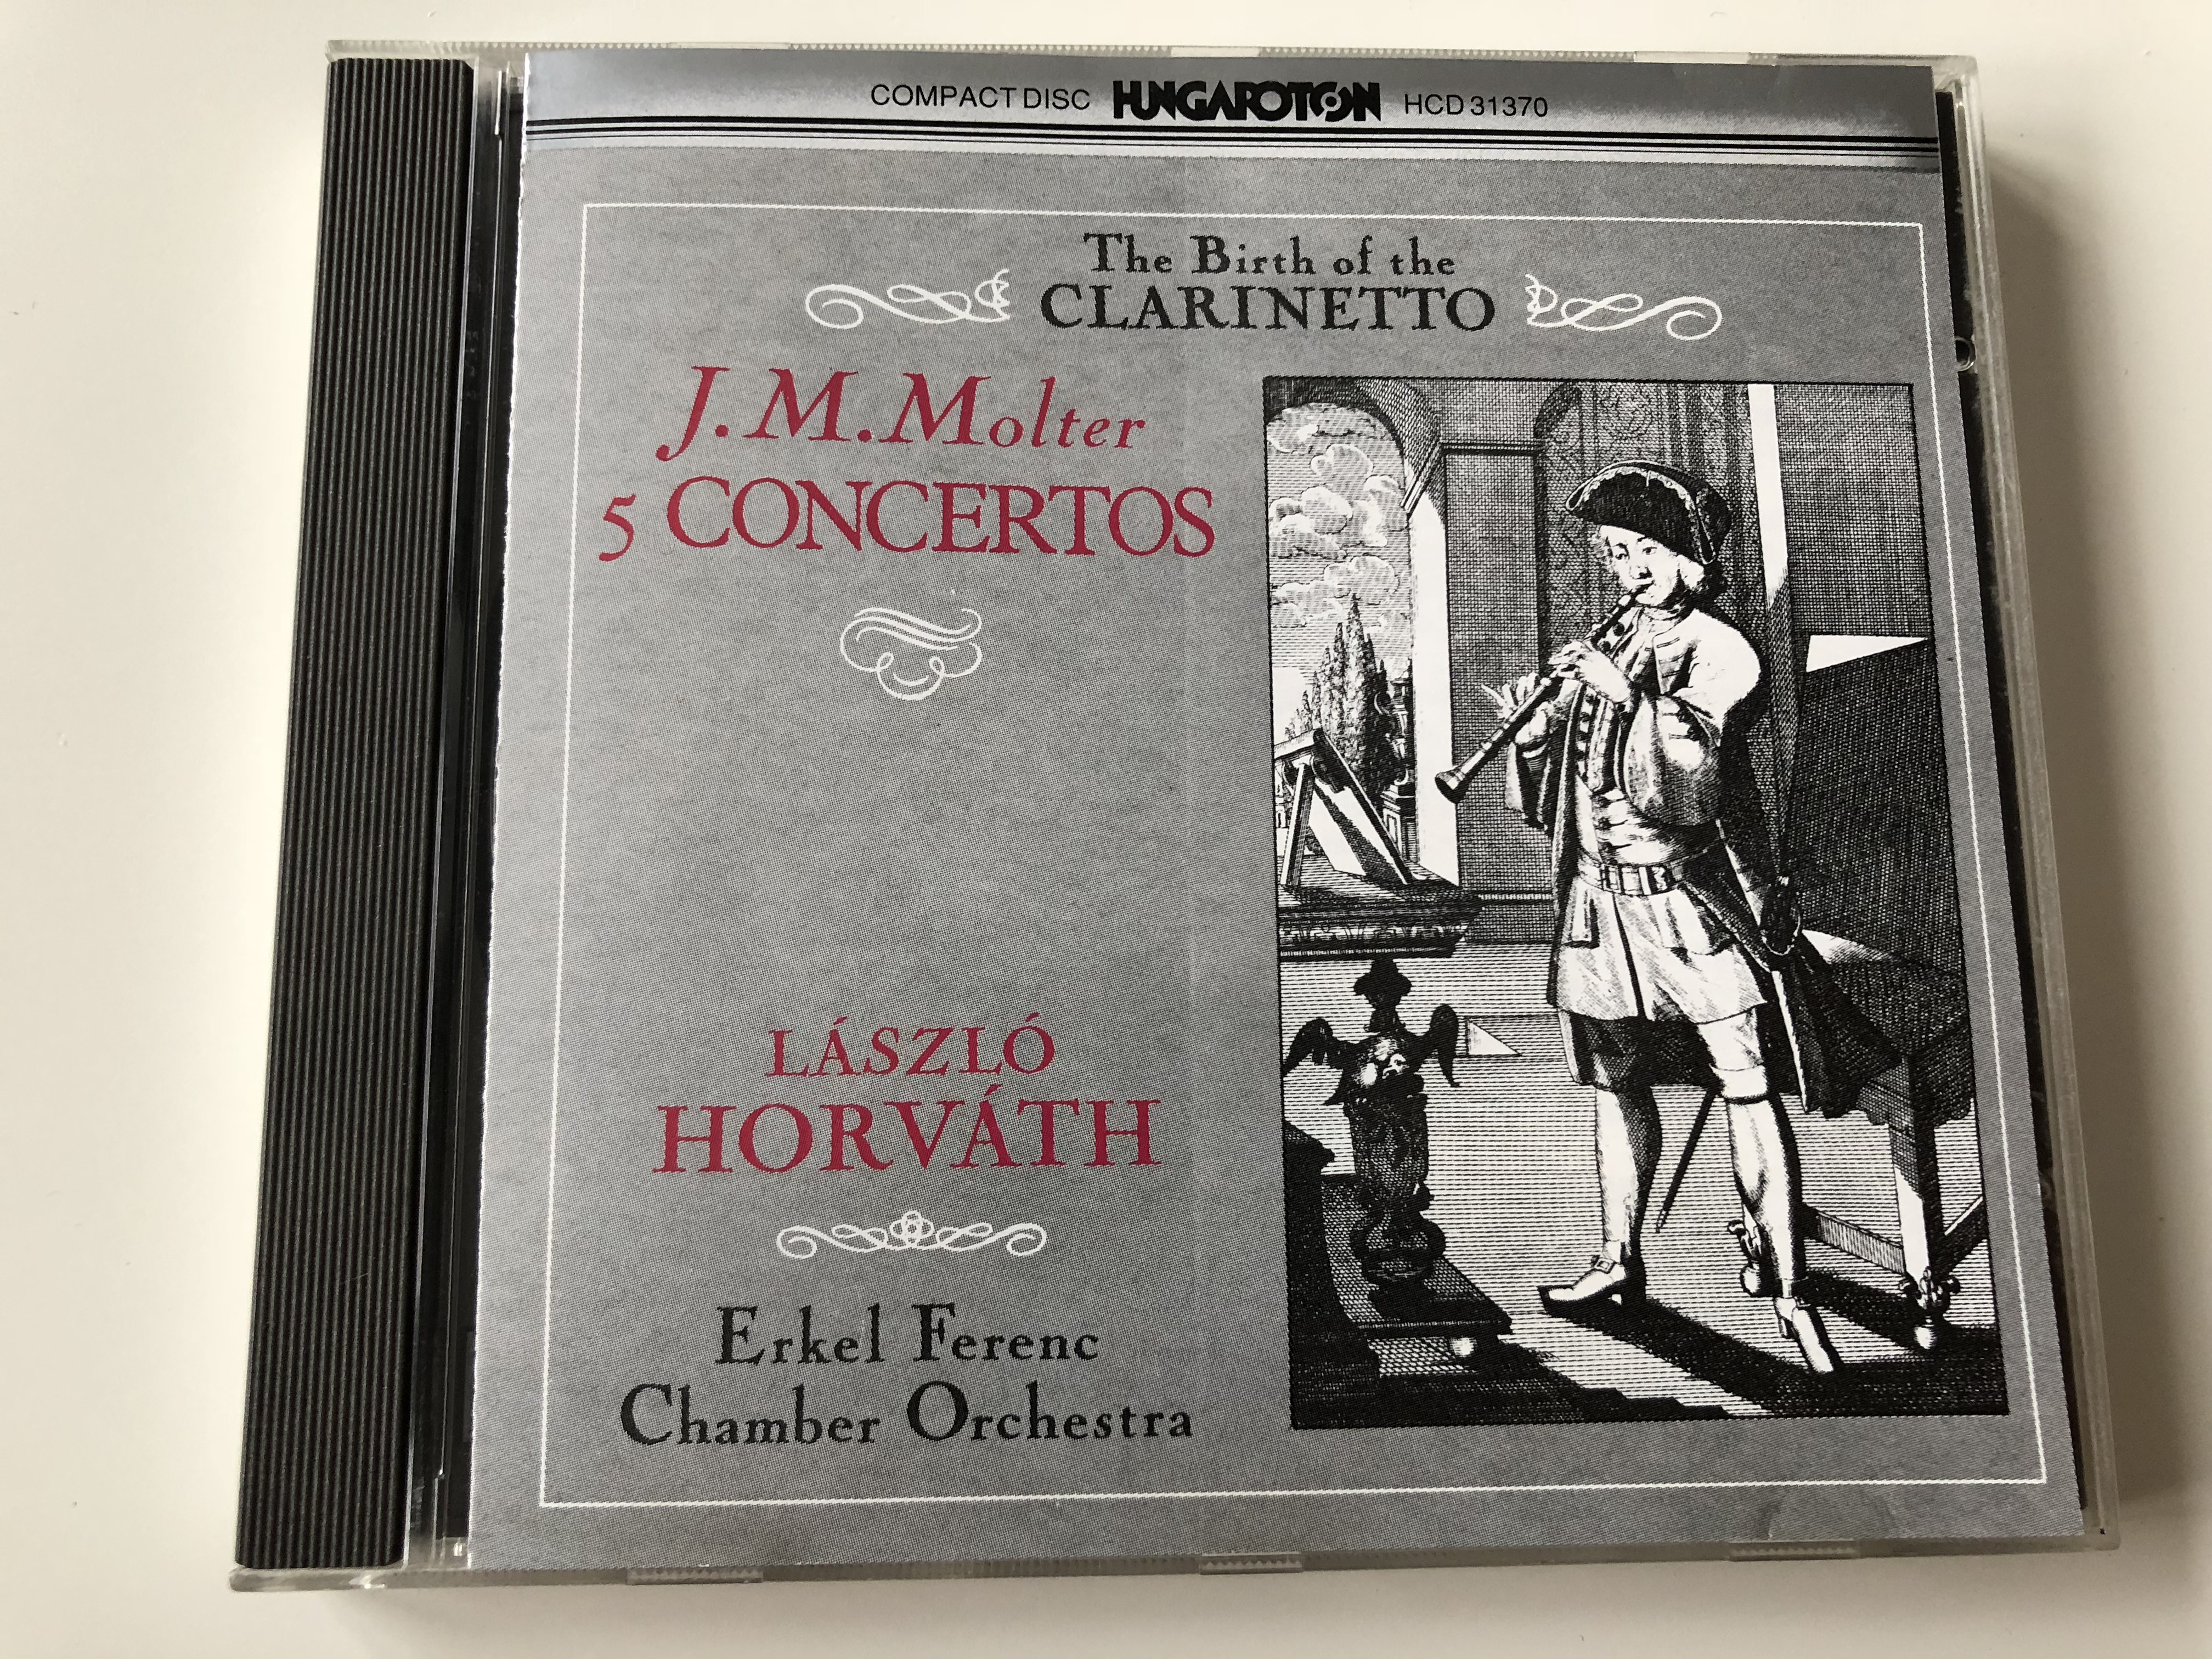 j.-m.-molter-5-concertos-the-birth-of-the-clarinetto-l-szl-horv-th-erkel-ferenc-chamber-orchestra-hungaroton-audio-cd-1991-hcd-31370-1-.jpg